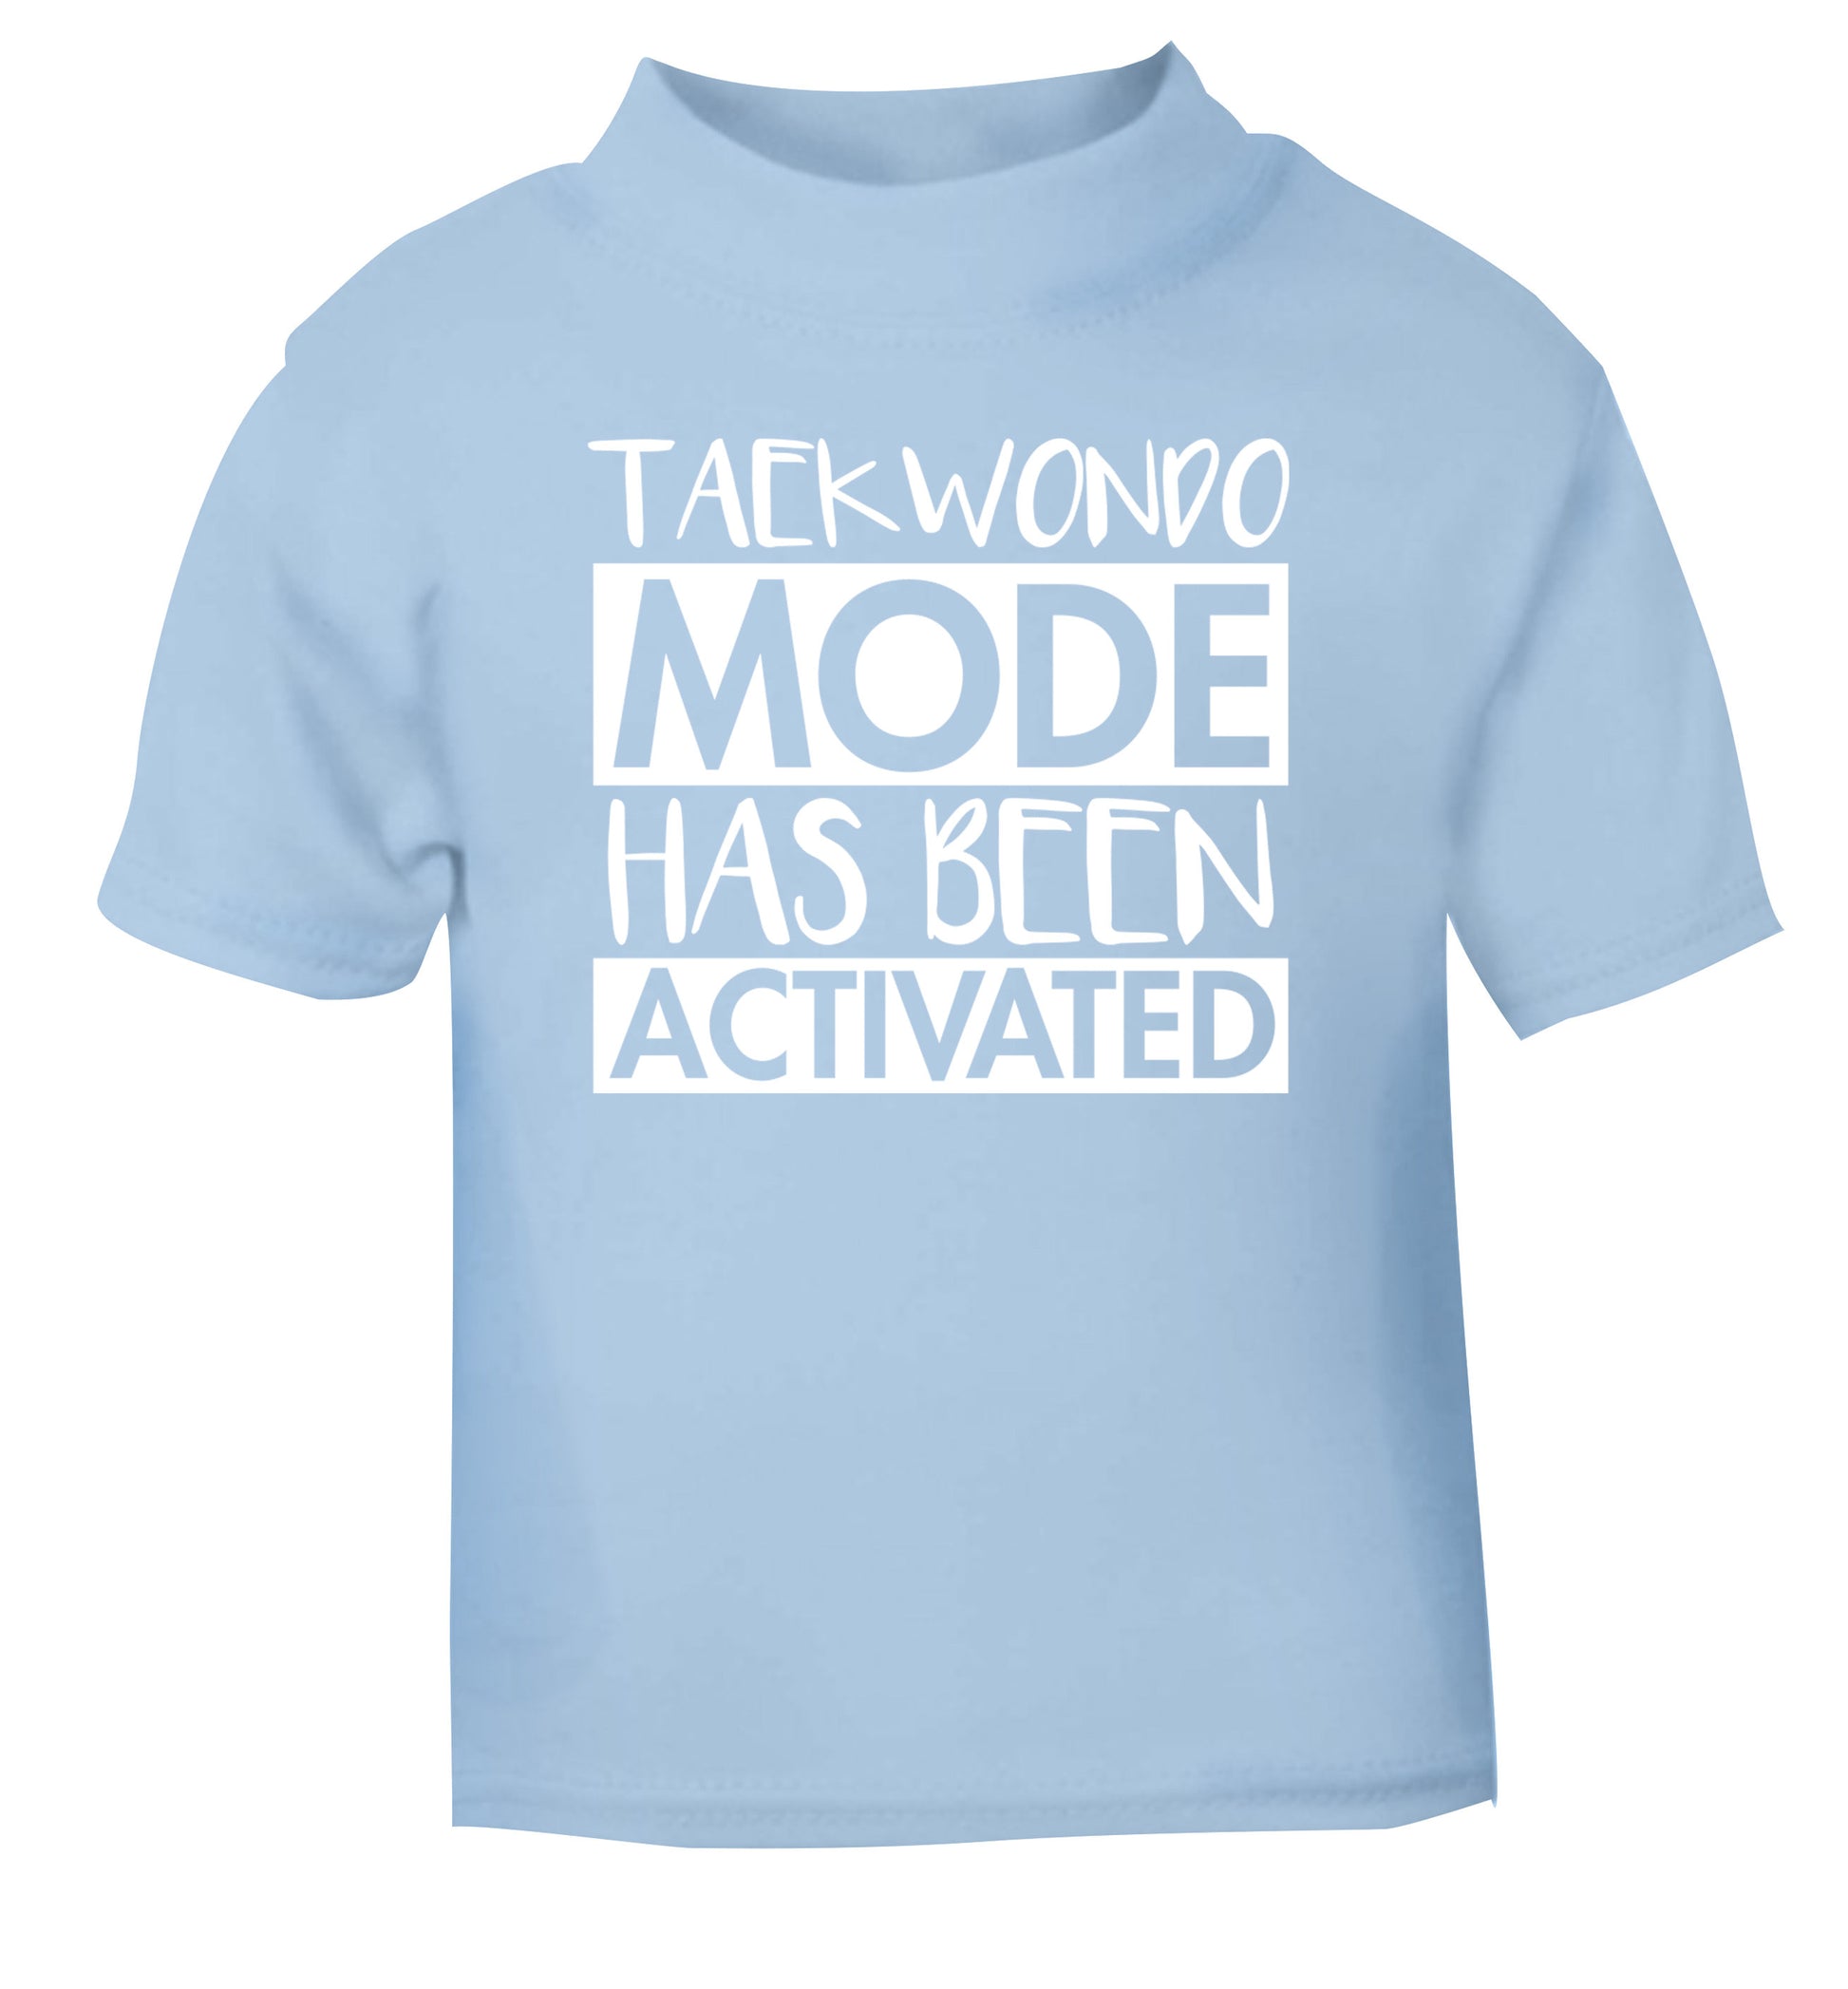 Taekwondo mode activated light blue Baby Toddler Tshirt 2 Years